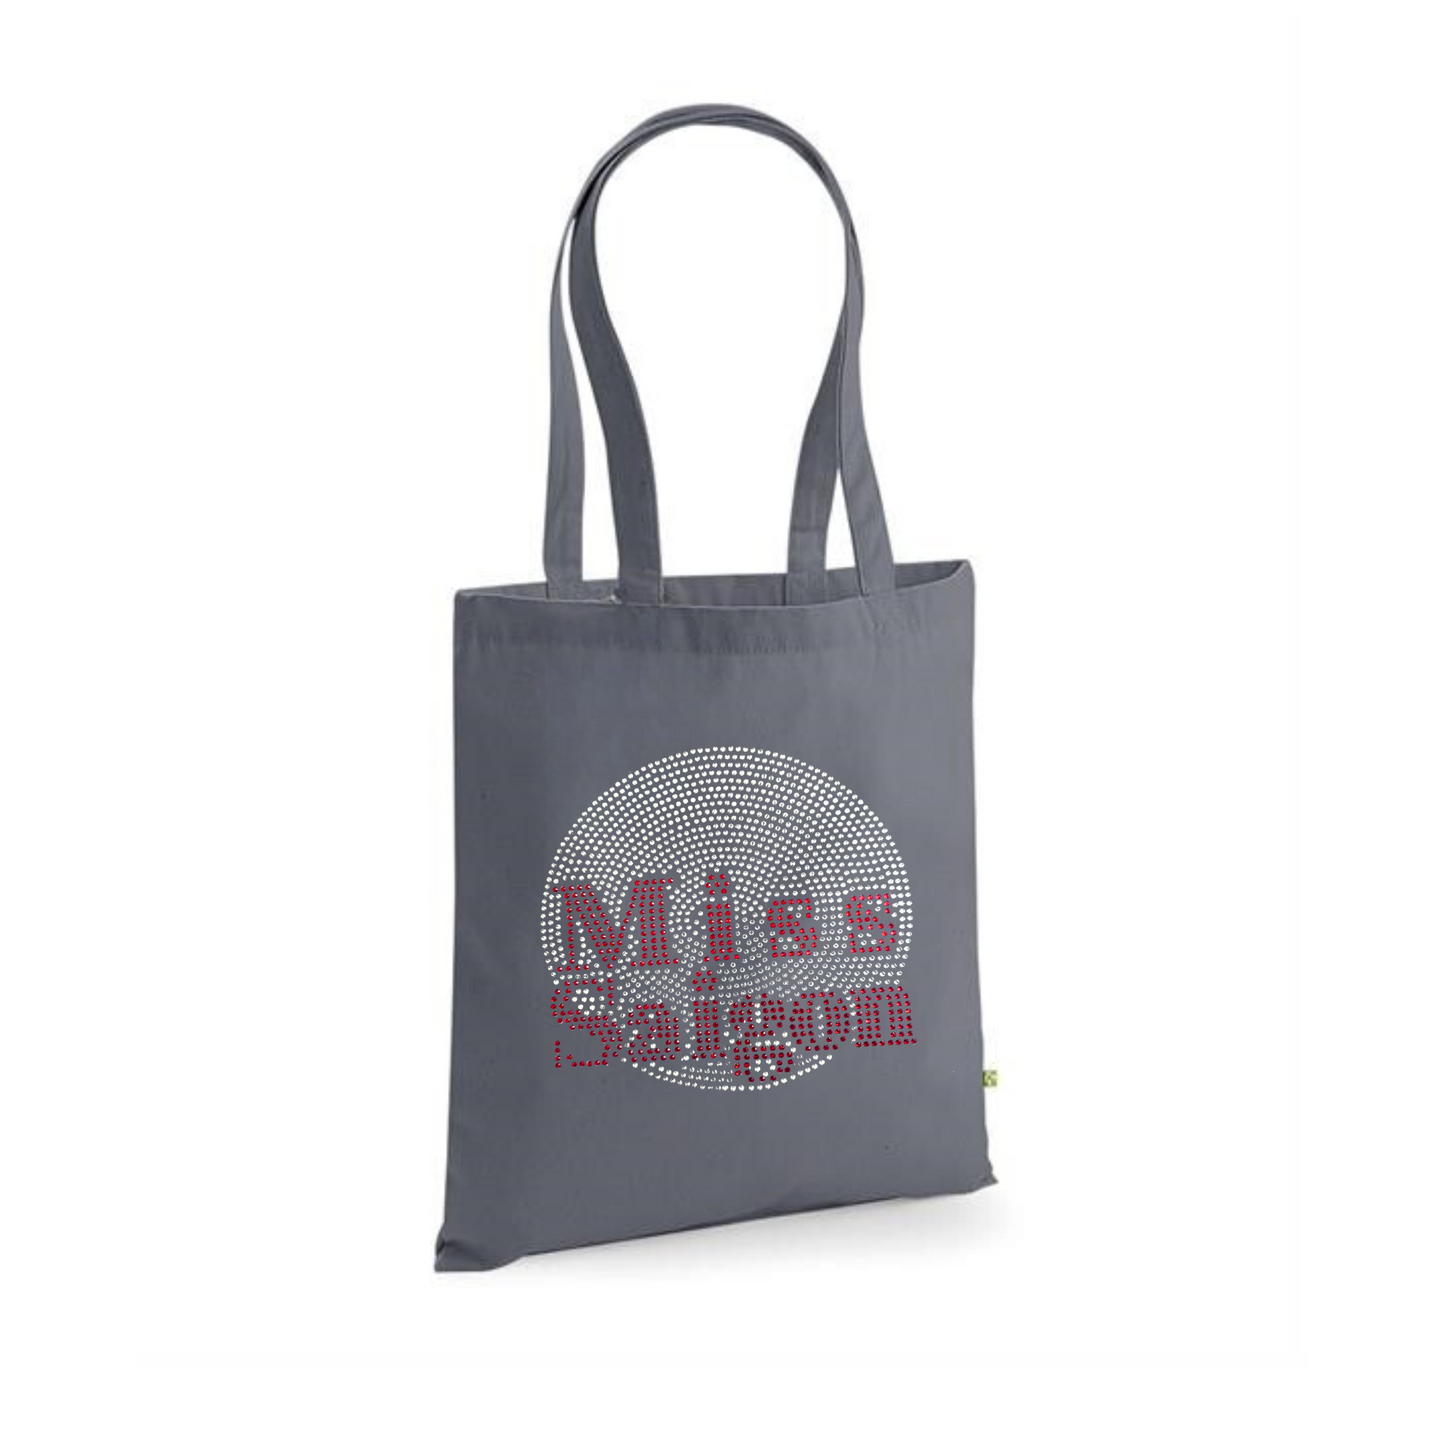 Miss Saigon musical theatre heavy cotton tote bag, sparkly gift idea or theatre keepsake